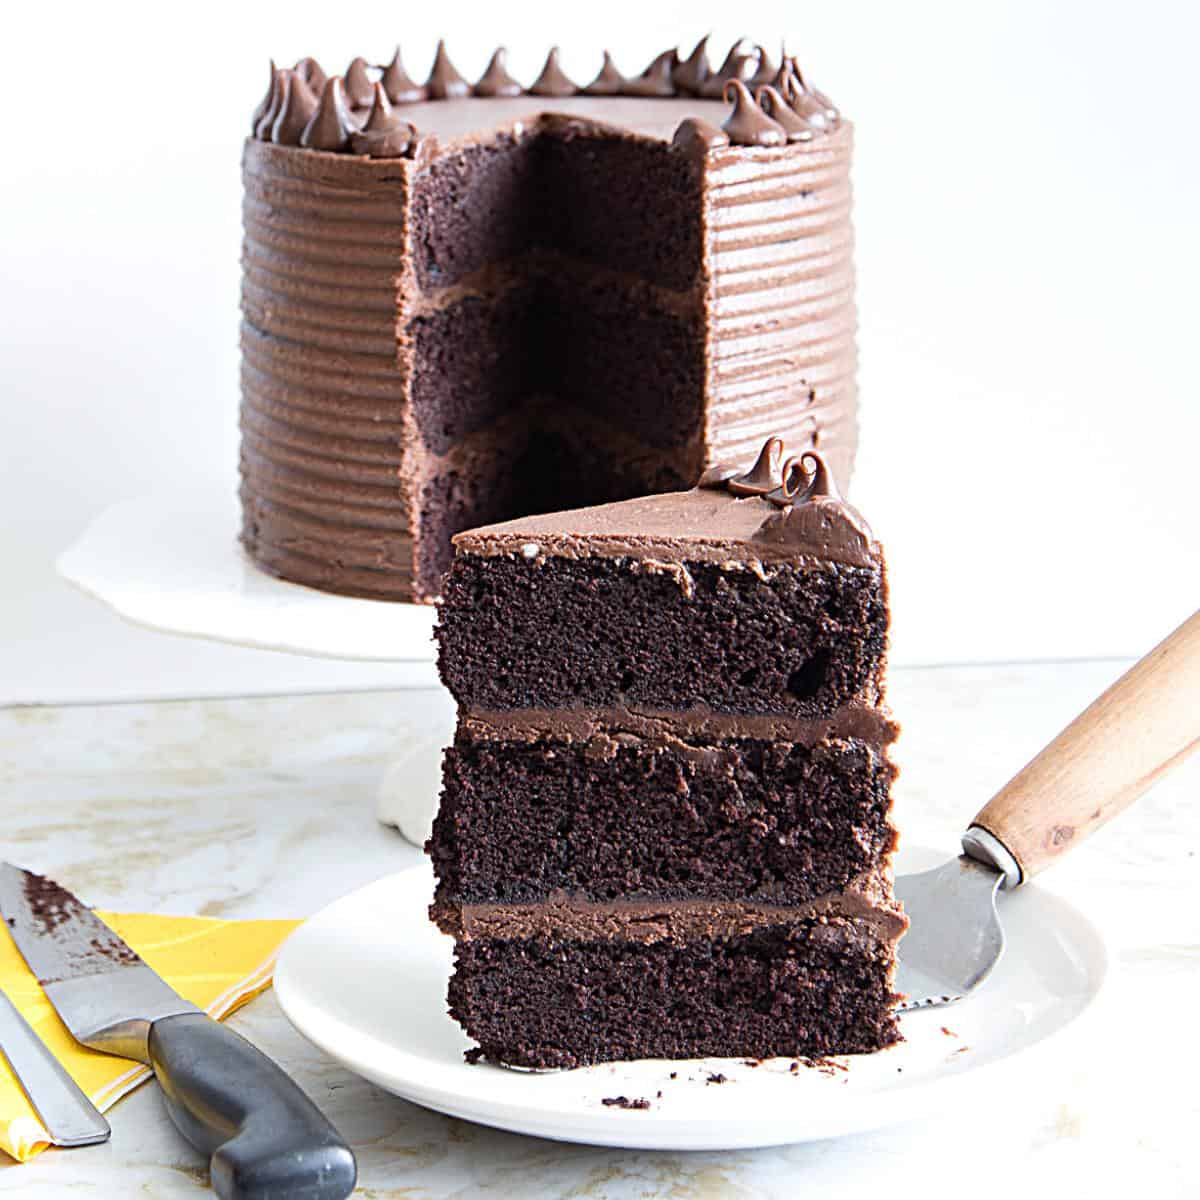 A sliced 8-inch chocolate cake.